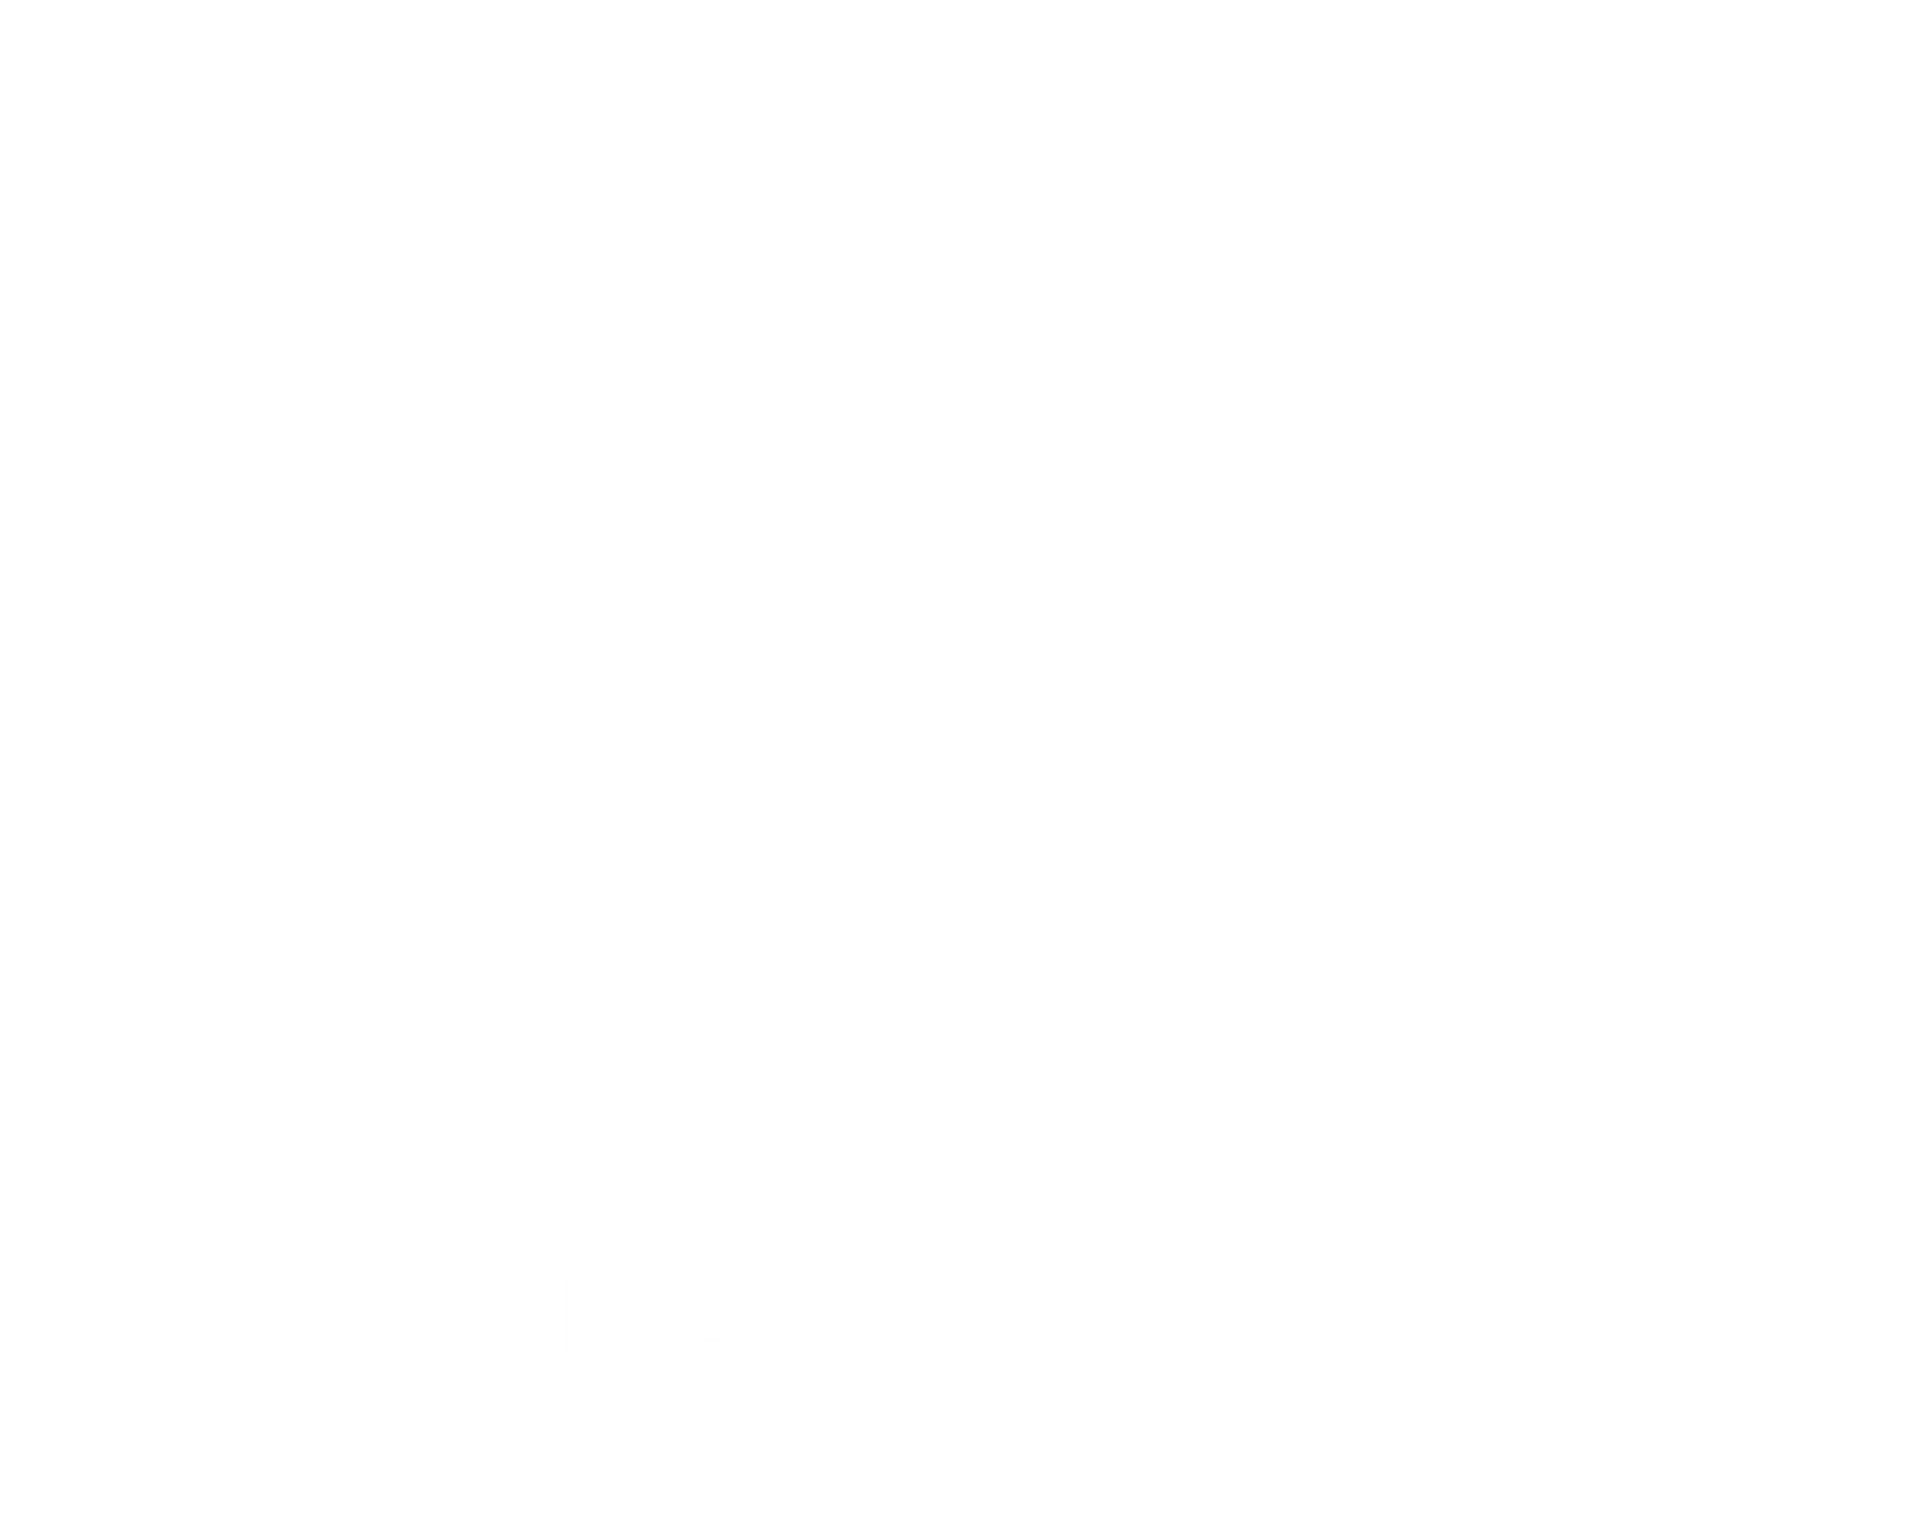 3D Conservation Group: We Buy Land